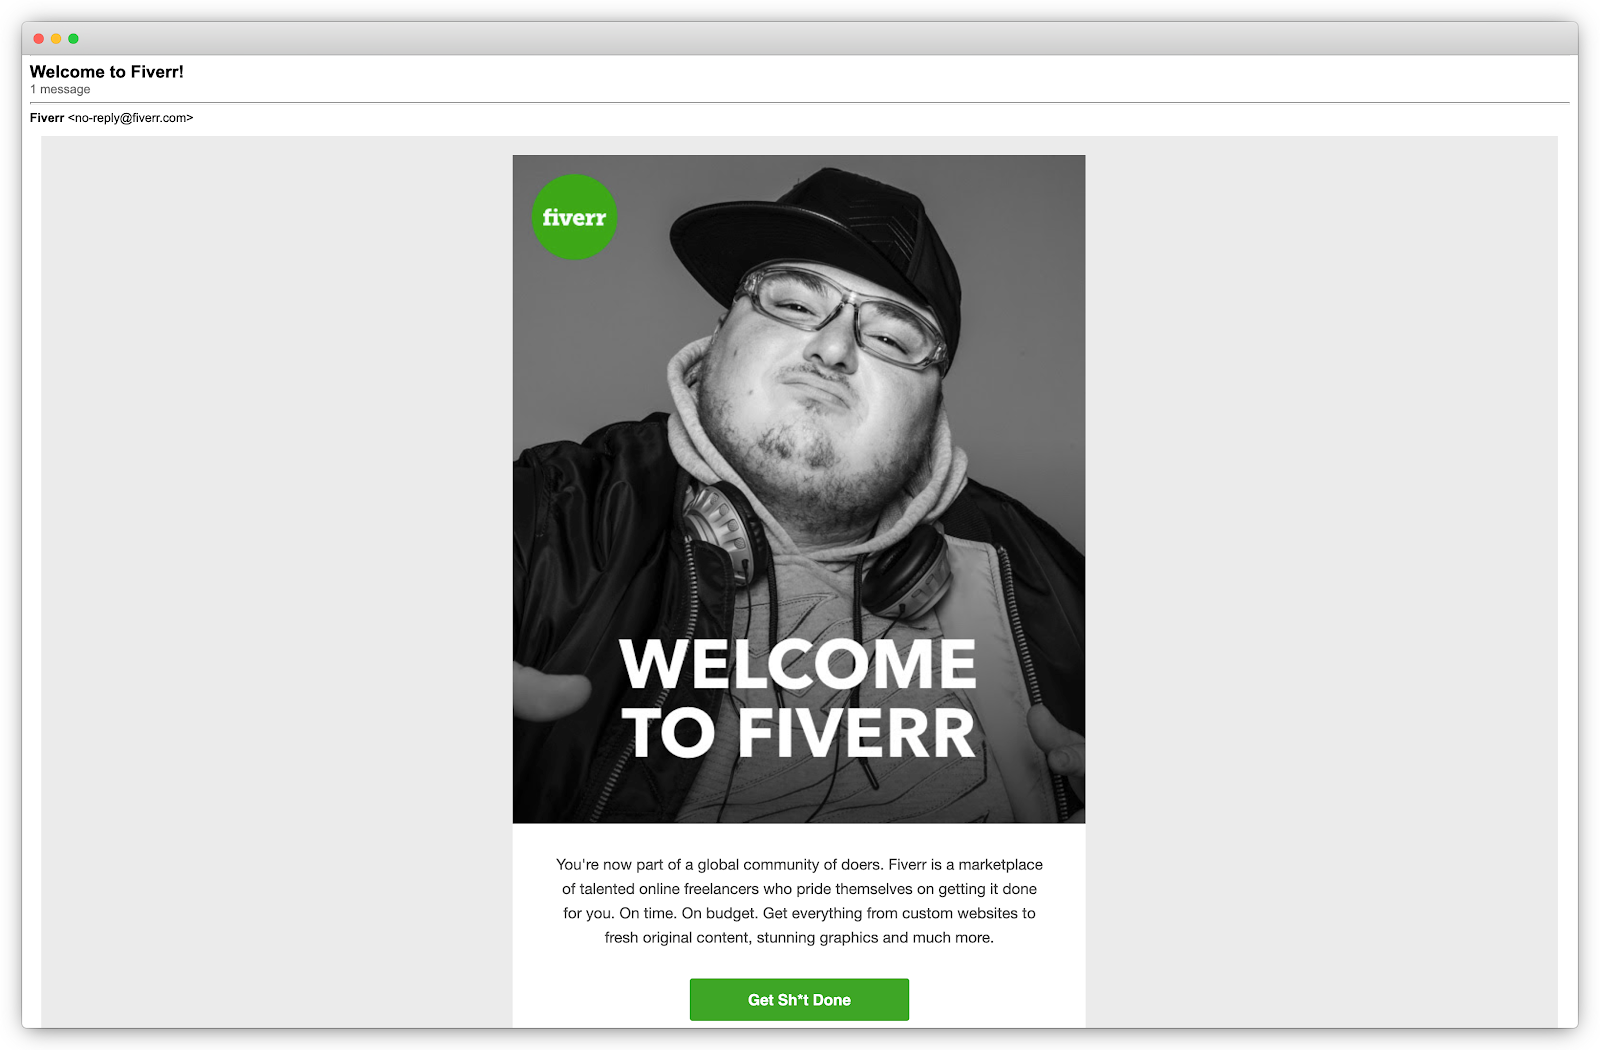 A screenshot of Fiverr's welcome message